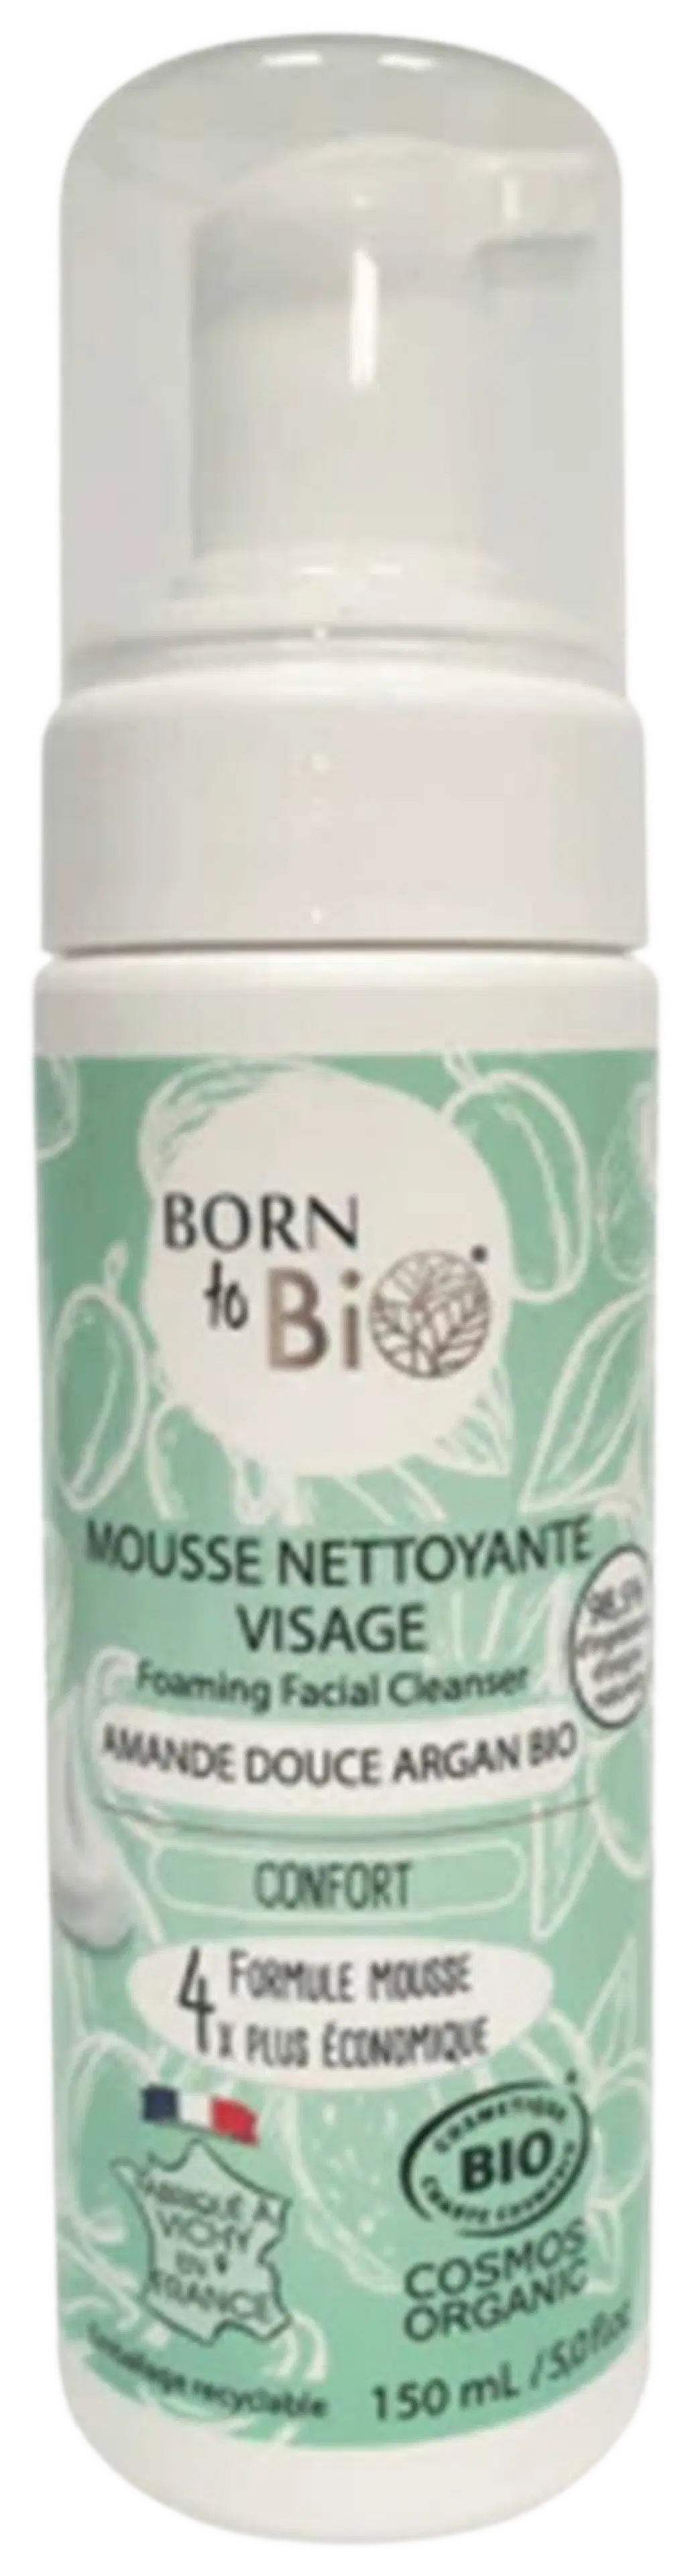 Born to Bio Cleansing Foam For Normal Skin - Puhdistusvaahto normaalille iholle 150ml